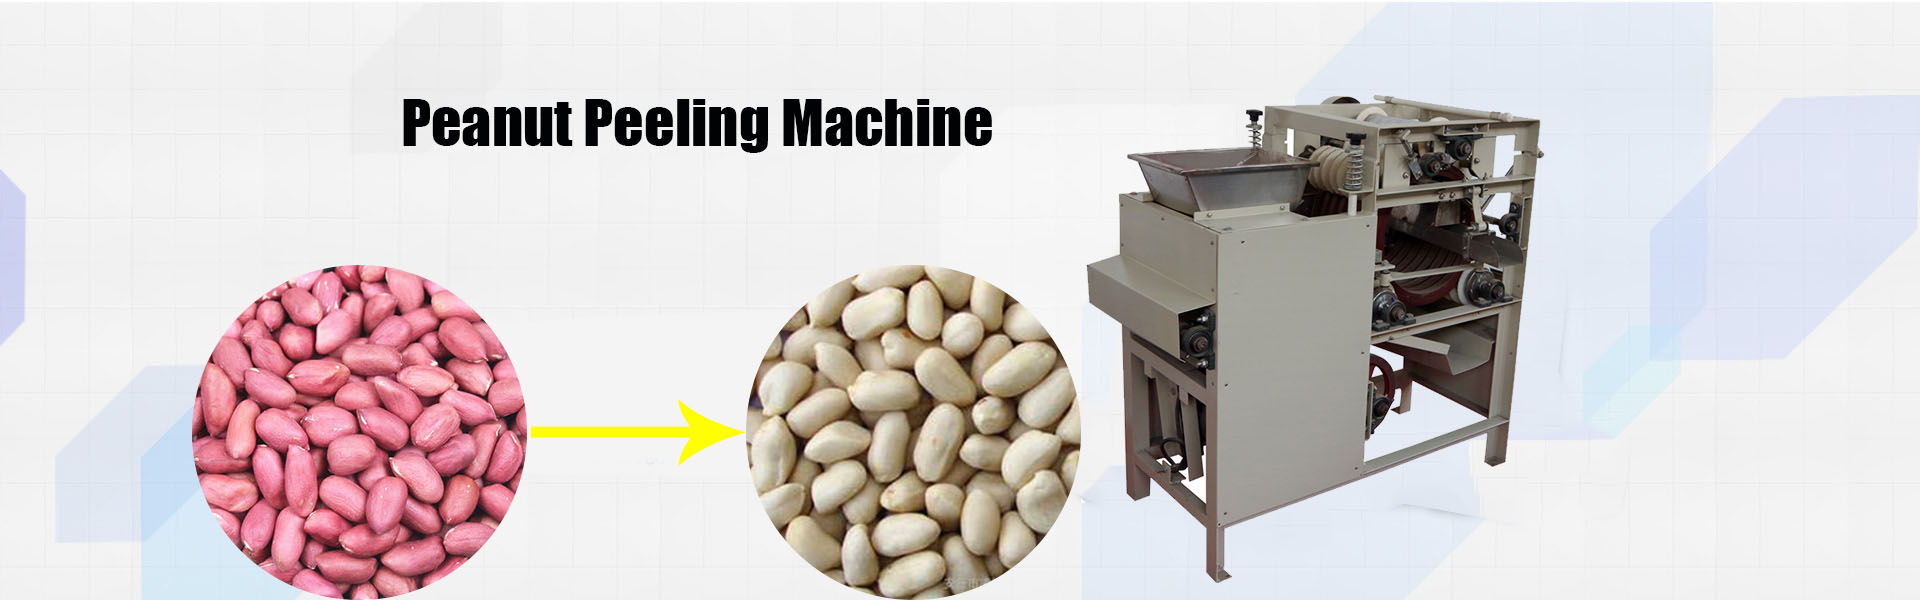 Garlic peeler machine price in pakistan where to buy-Everfit Food